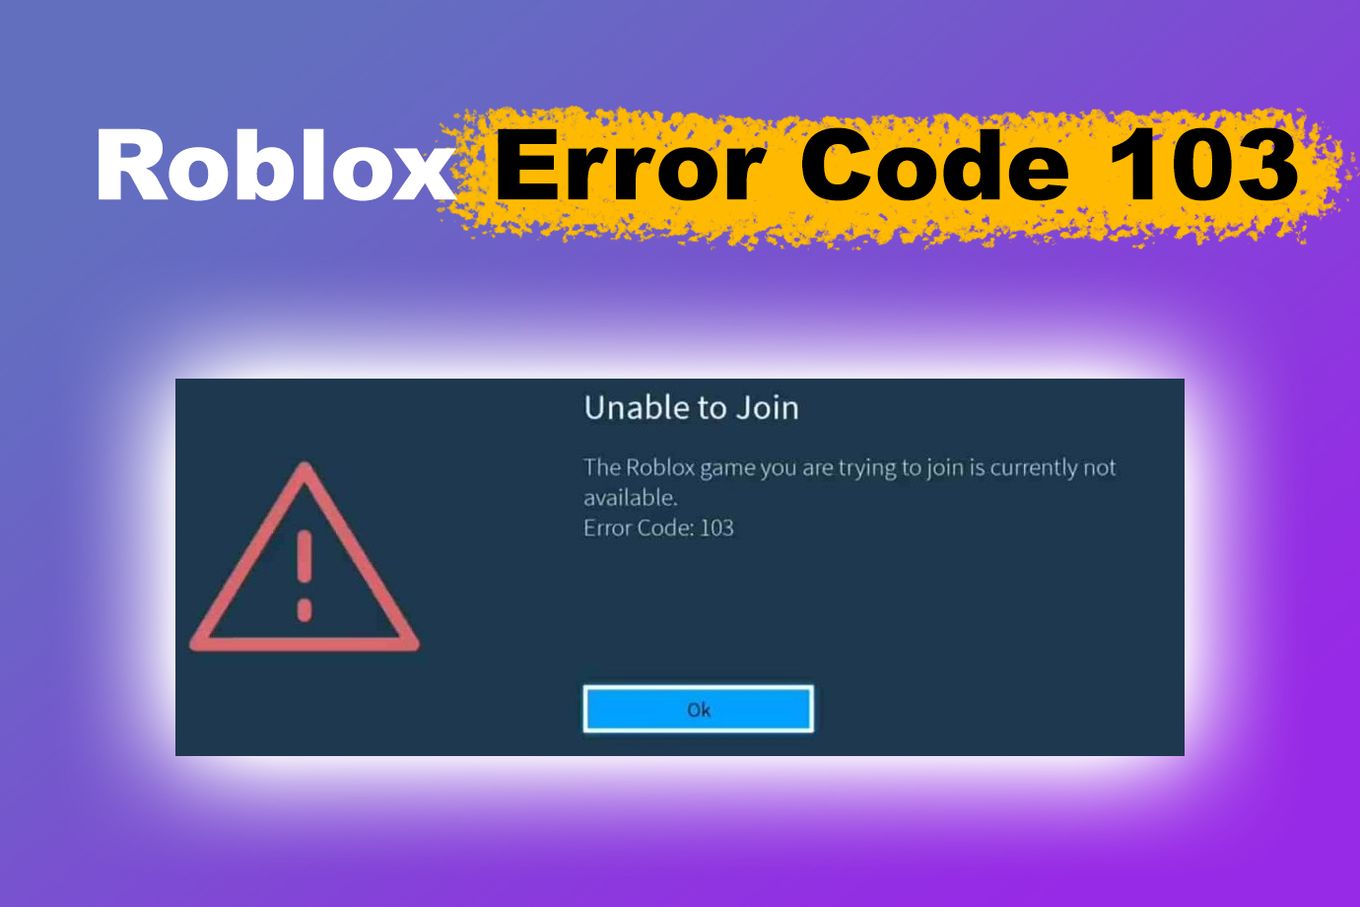 Roblox Error Code 267 - 10 Fixes! 